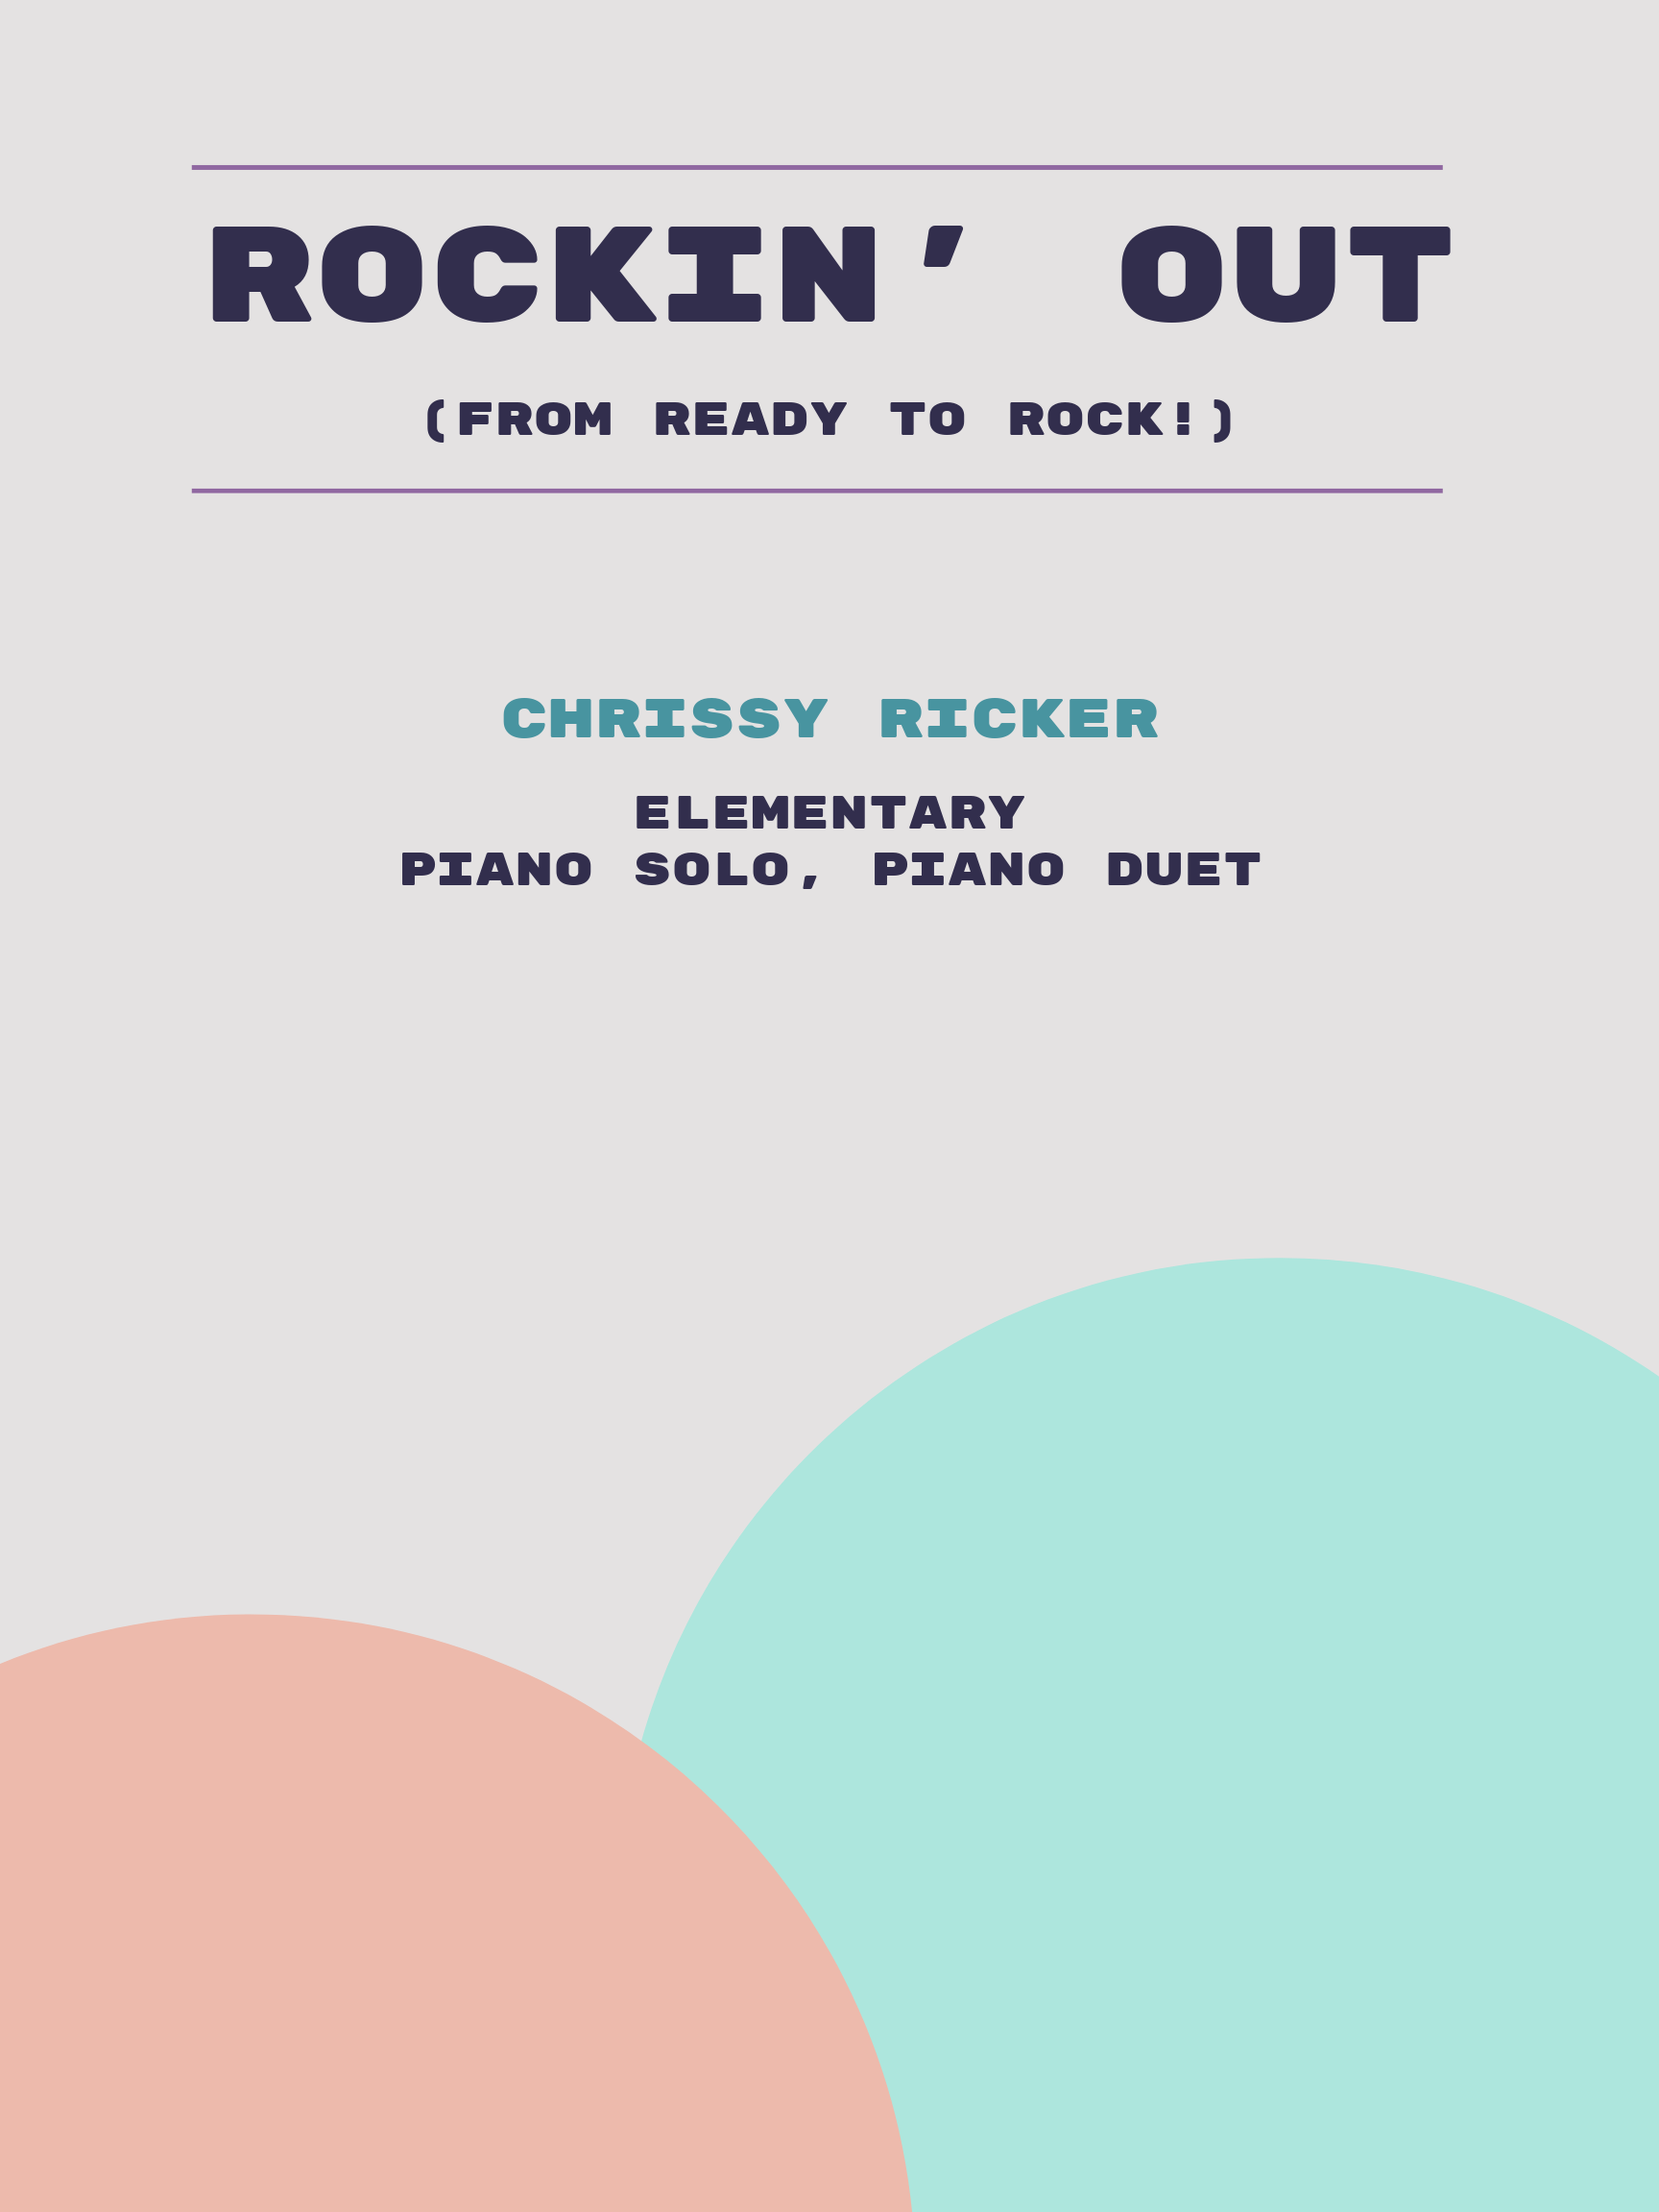 Rockin' Out by Chrissy Ricker